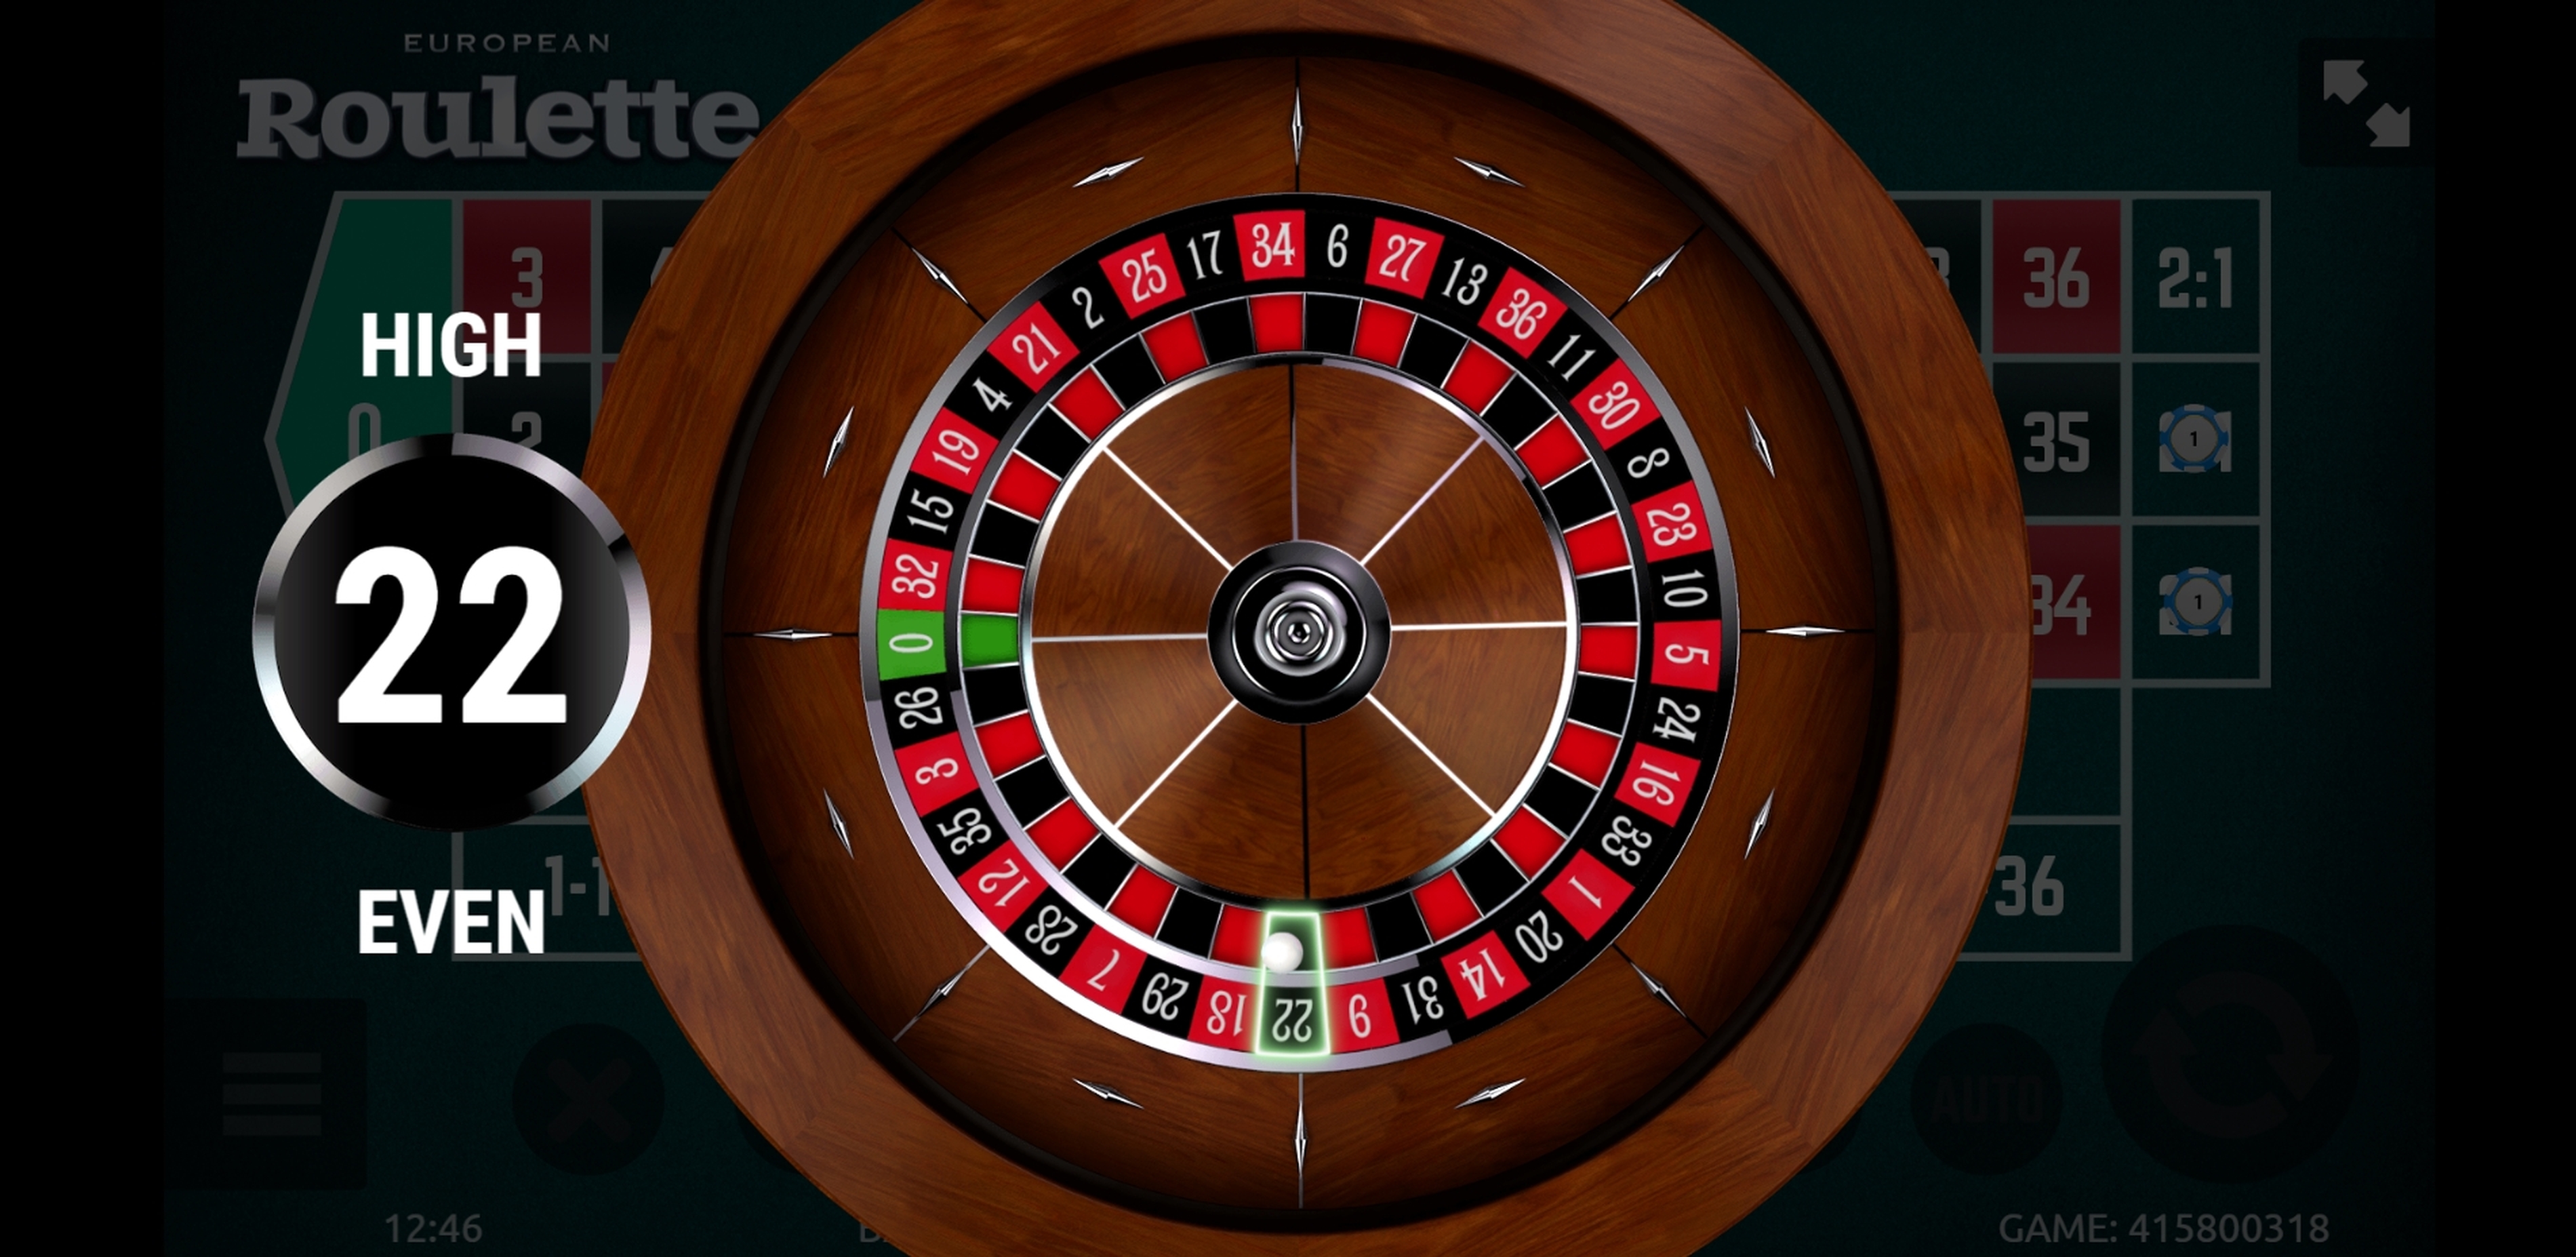 European Roulette Slot ᐈ Free Play for Money Prizes